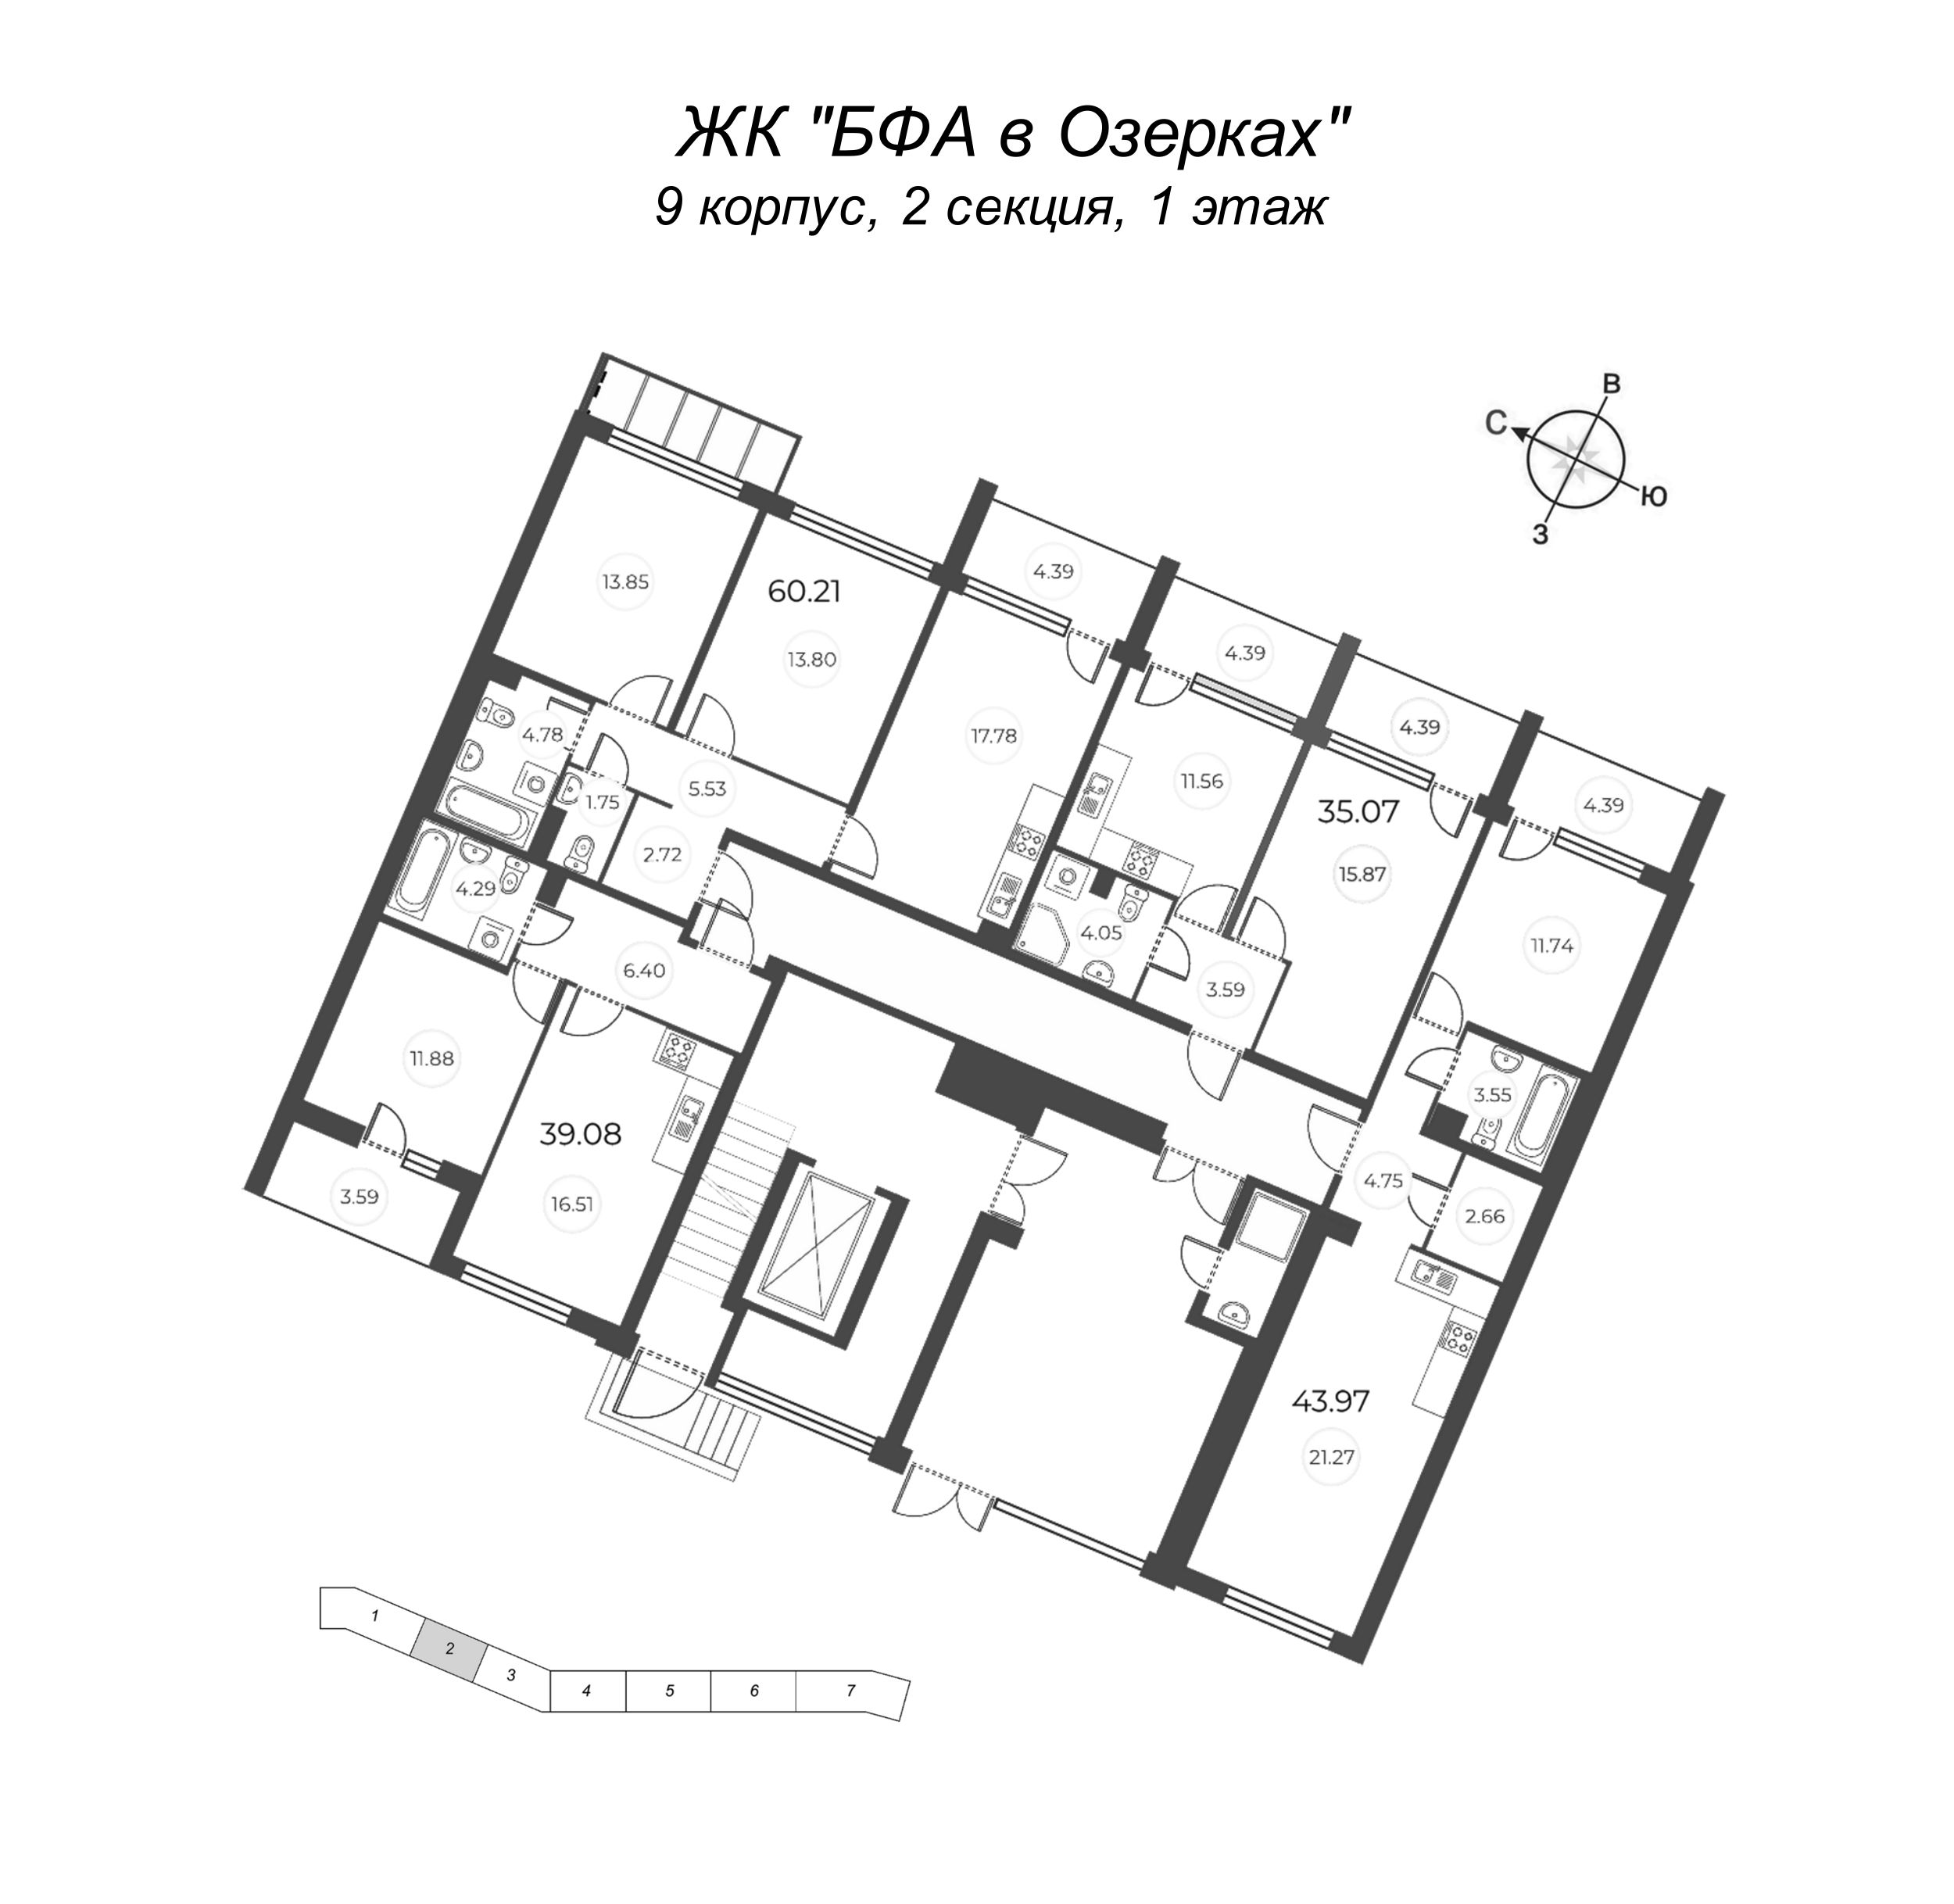 2-комнатная (Евро) квартира, 46.17 м² - планировка этажа